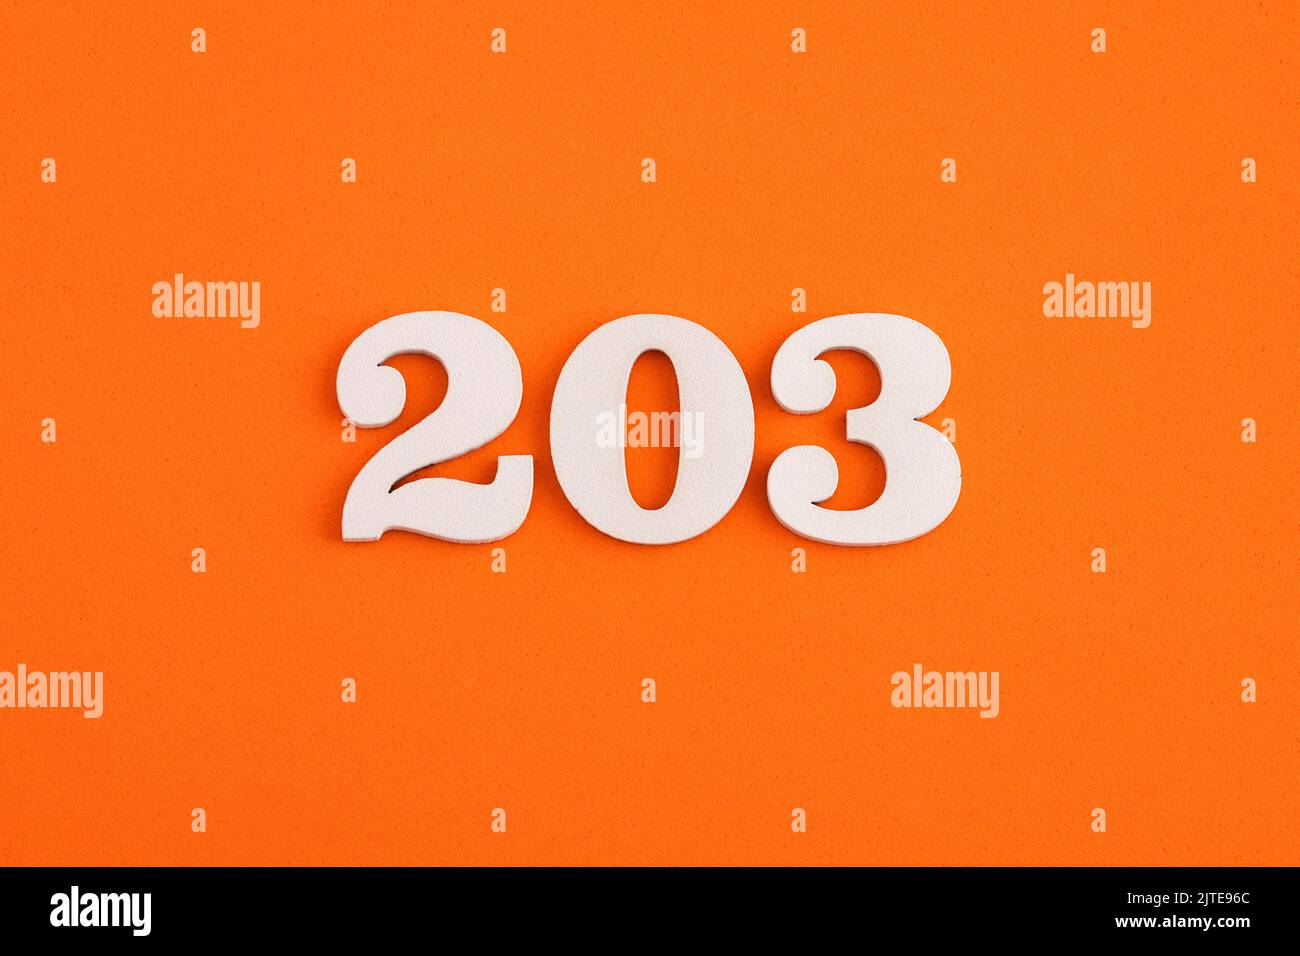 Number 203 - On orange foam rubber background Stock Photo